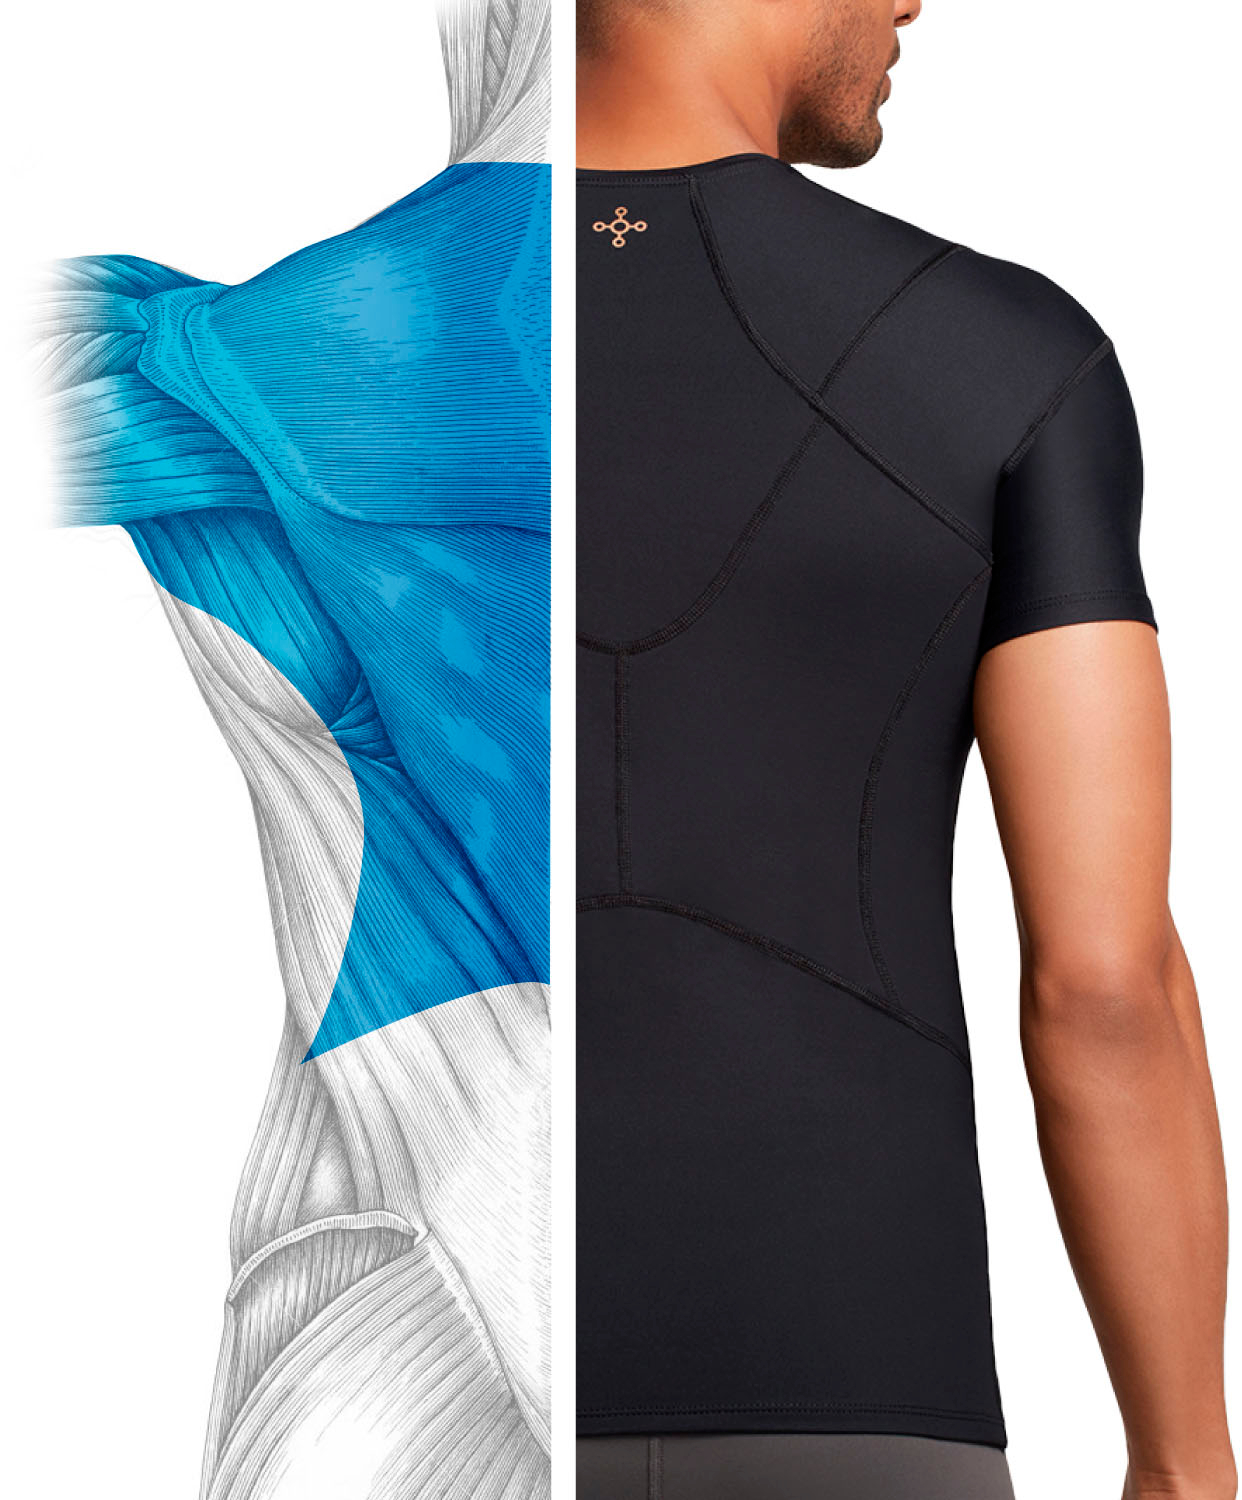 Listo Ausencia Desnatar Tommie Copper Men's Short Sleeve Shoulder Support Shirt Black  0873MR-0101-05 - Best Buy